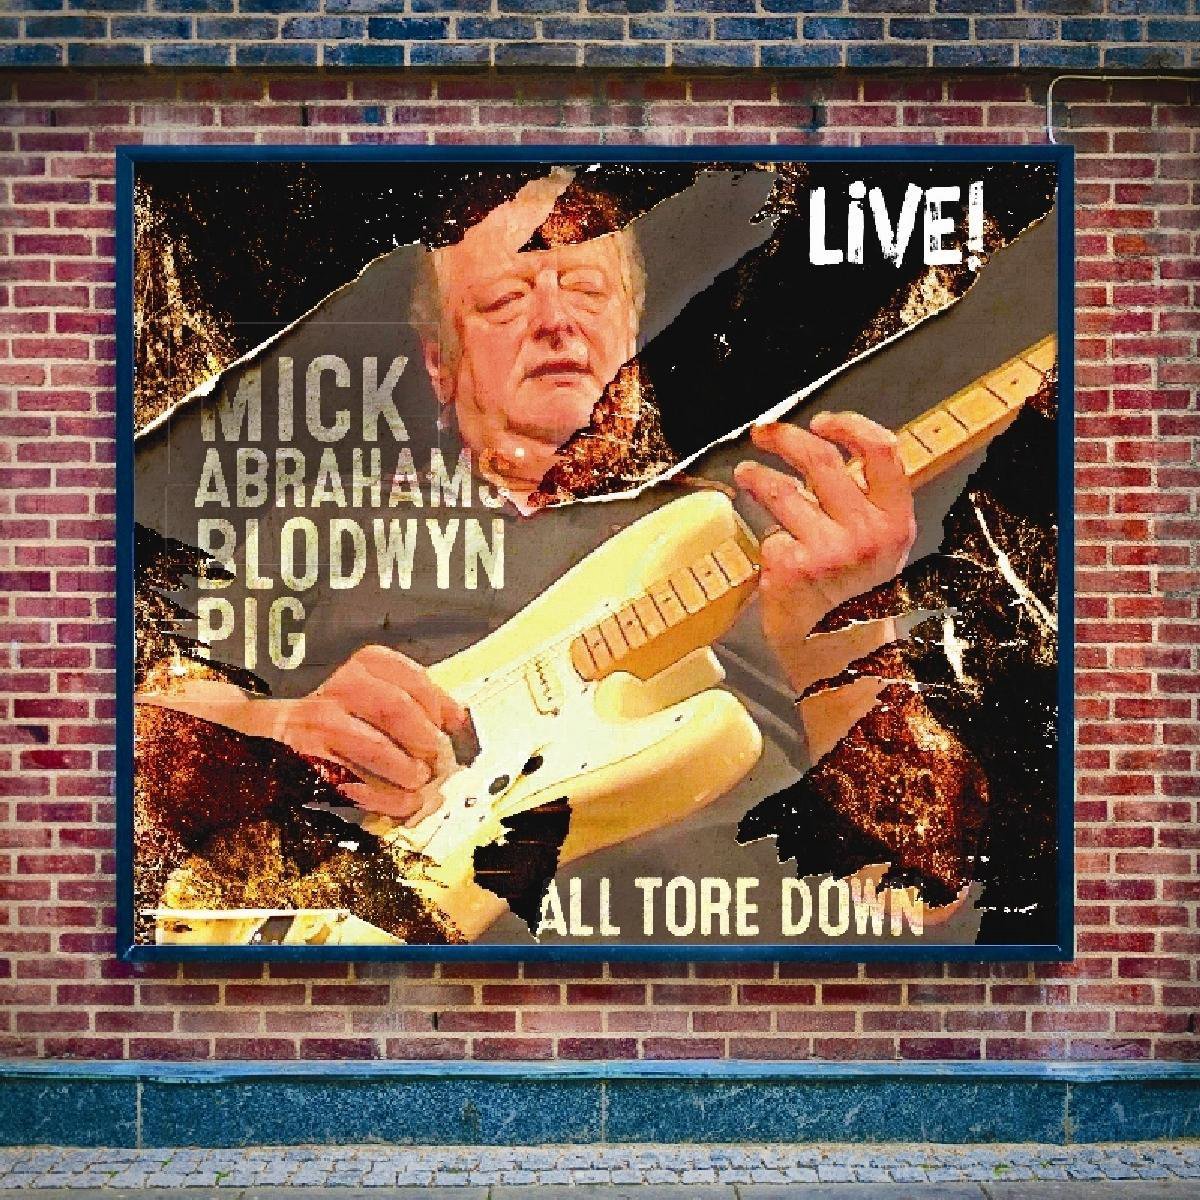 All Tore Down - Mick Abrahams' Blodwyn Pig